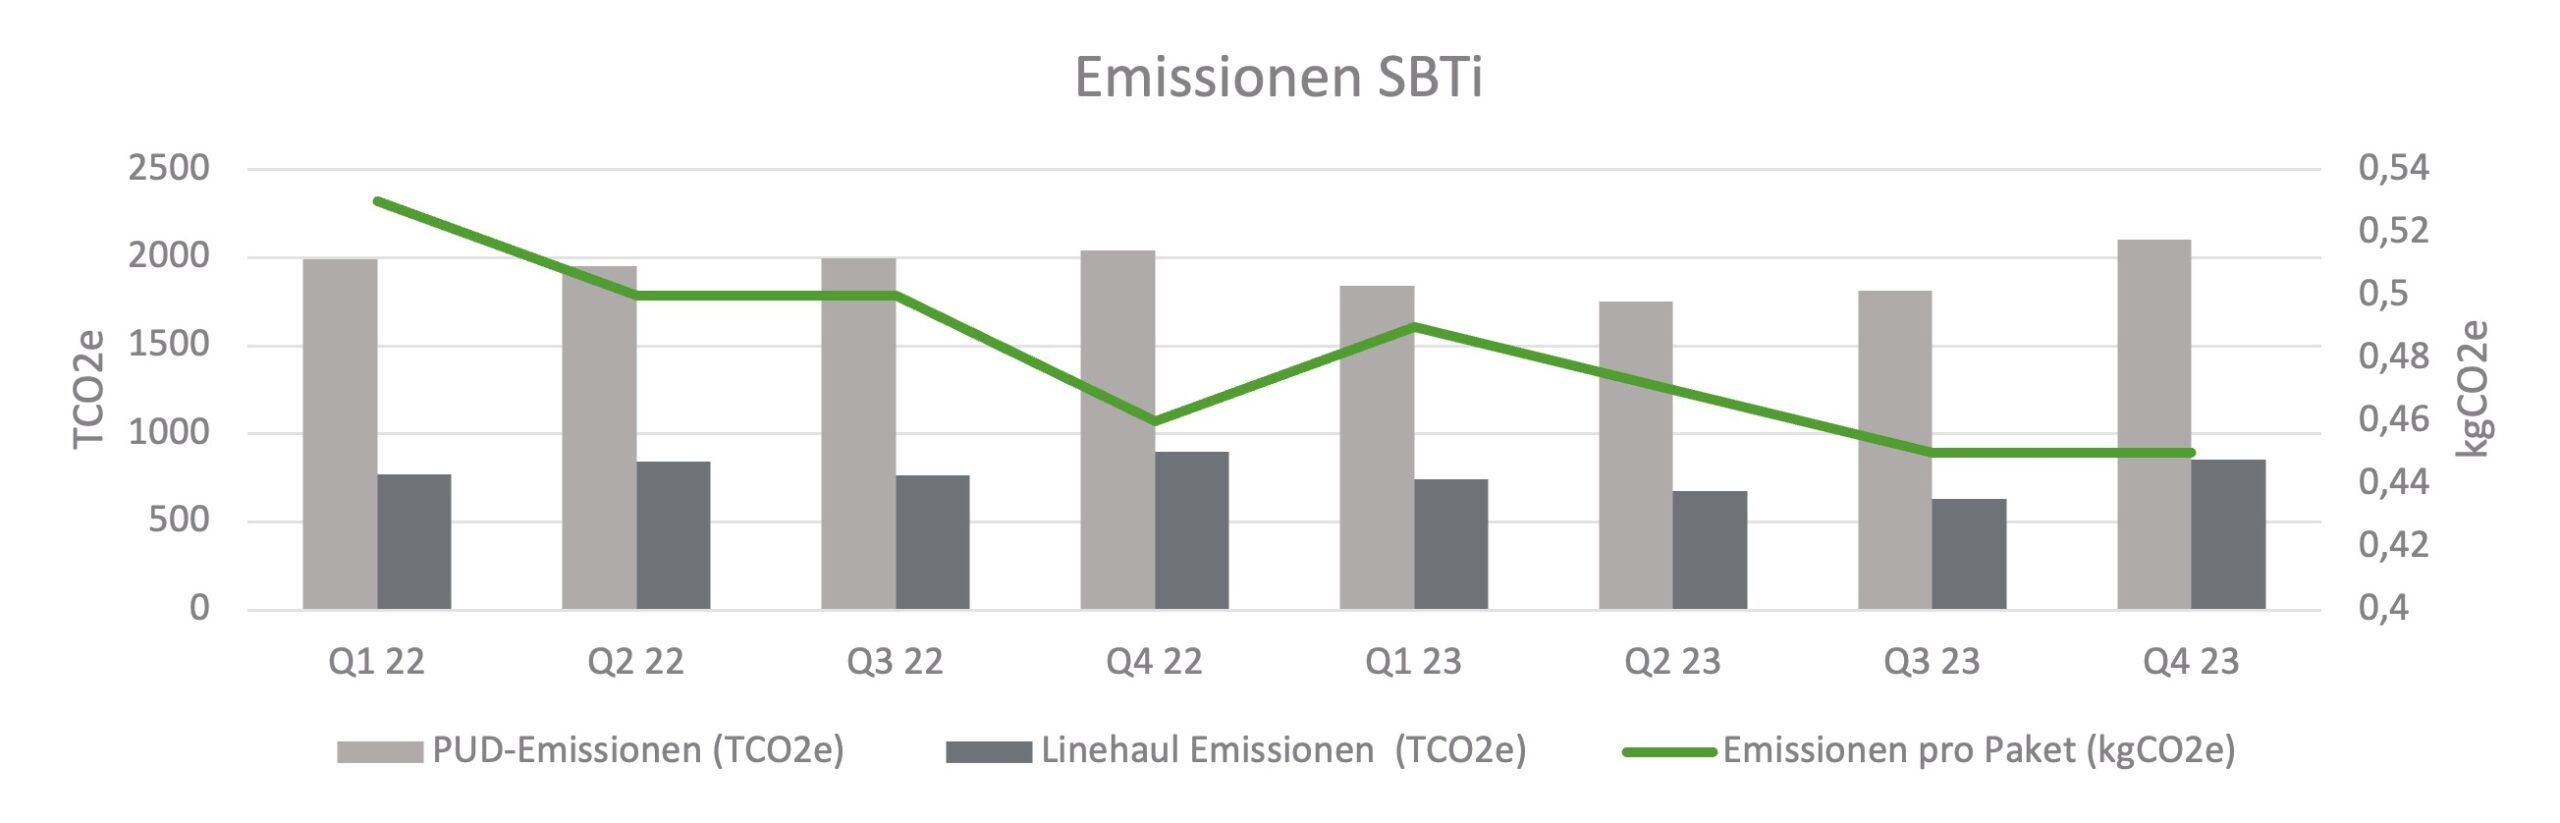 Emissionen SBTi